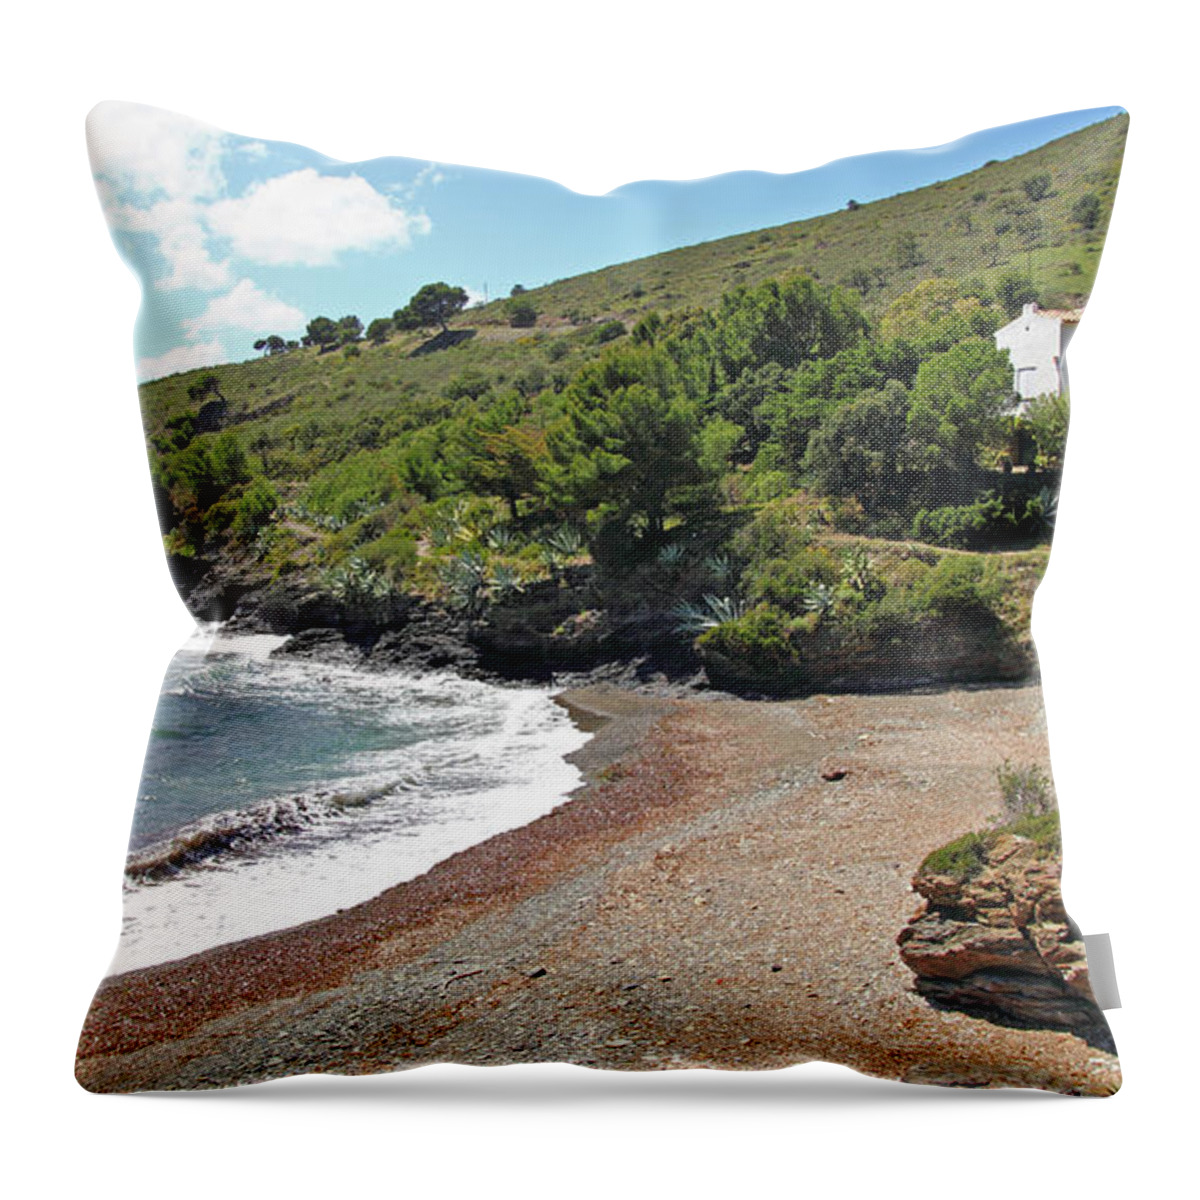 Tranquility Throw Pillow featuring the photograph Cala Calitjàs In Cap De Creus by Rfarrarons